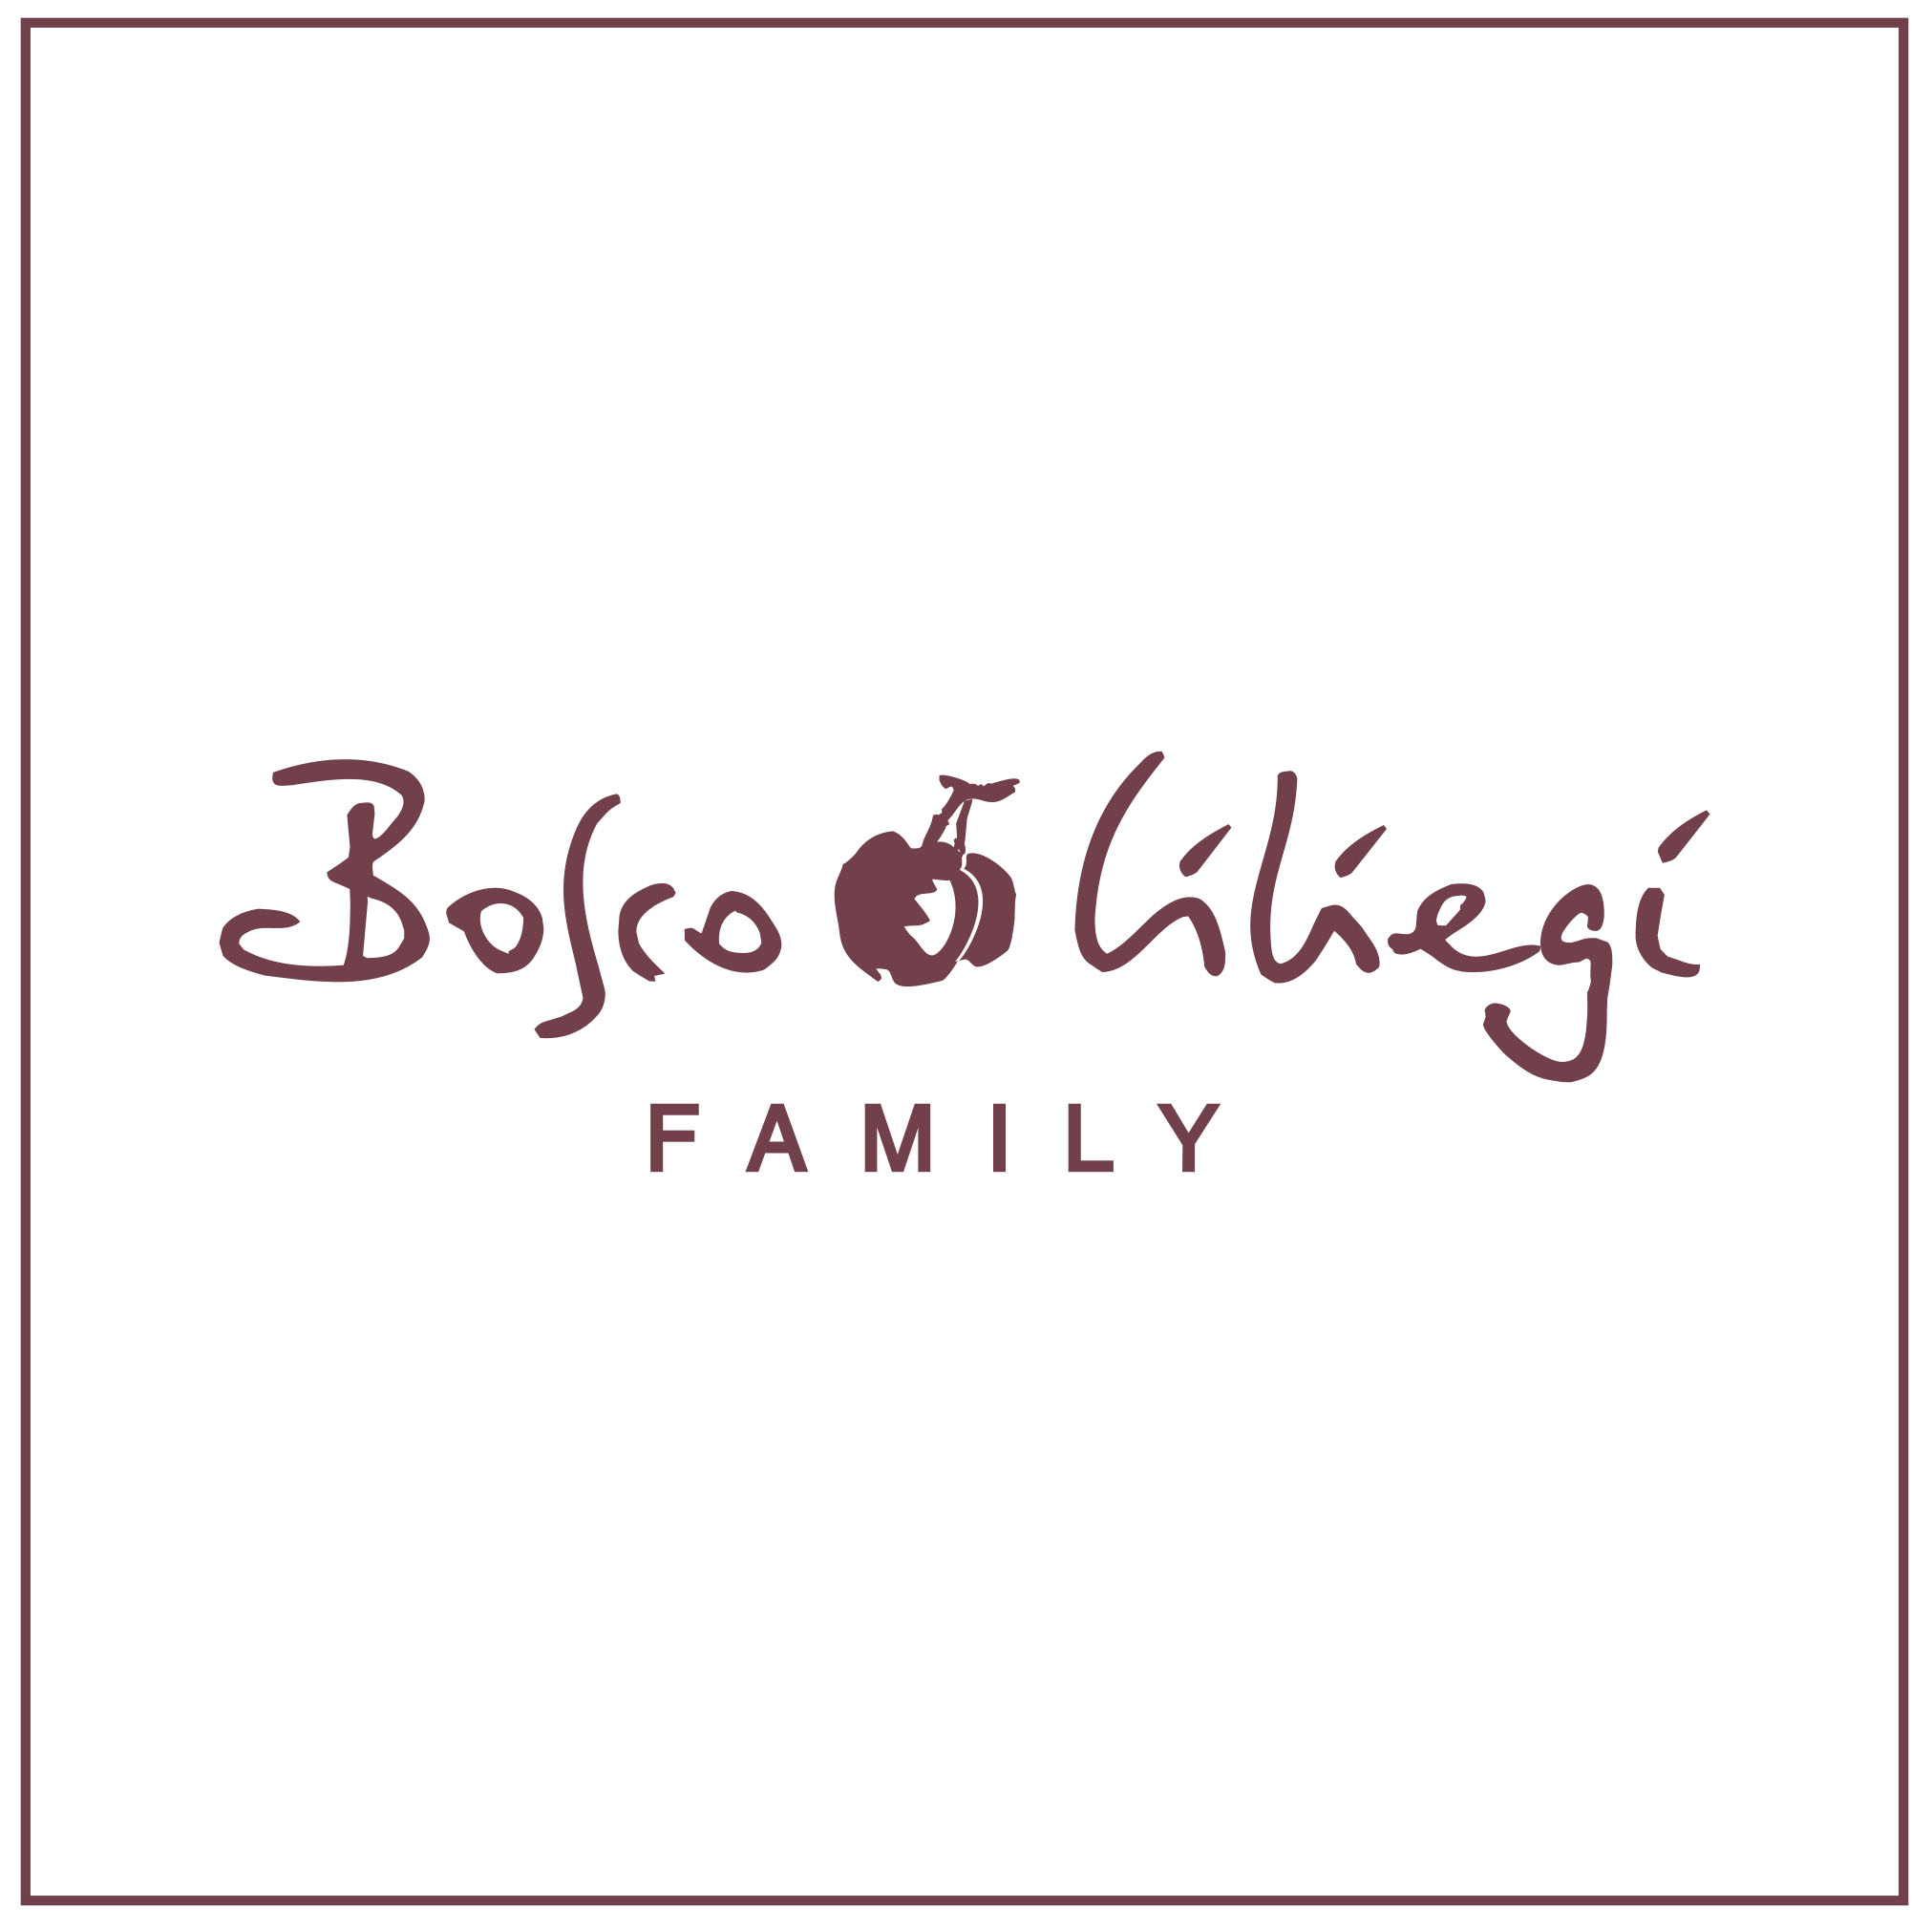 Боско ди. Bosco di Ciliegi компания. Логотипboscodiciliegi. Bosco Family логотип. Боско ди Чильеджи лого.